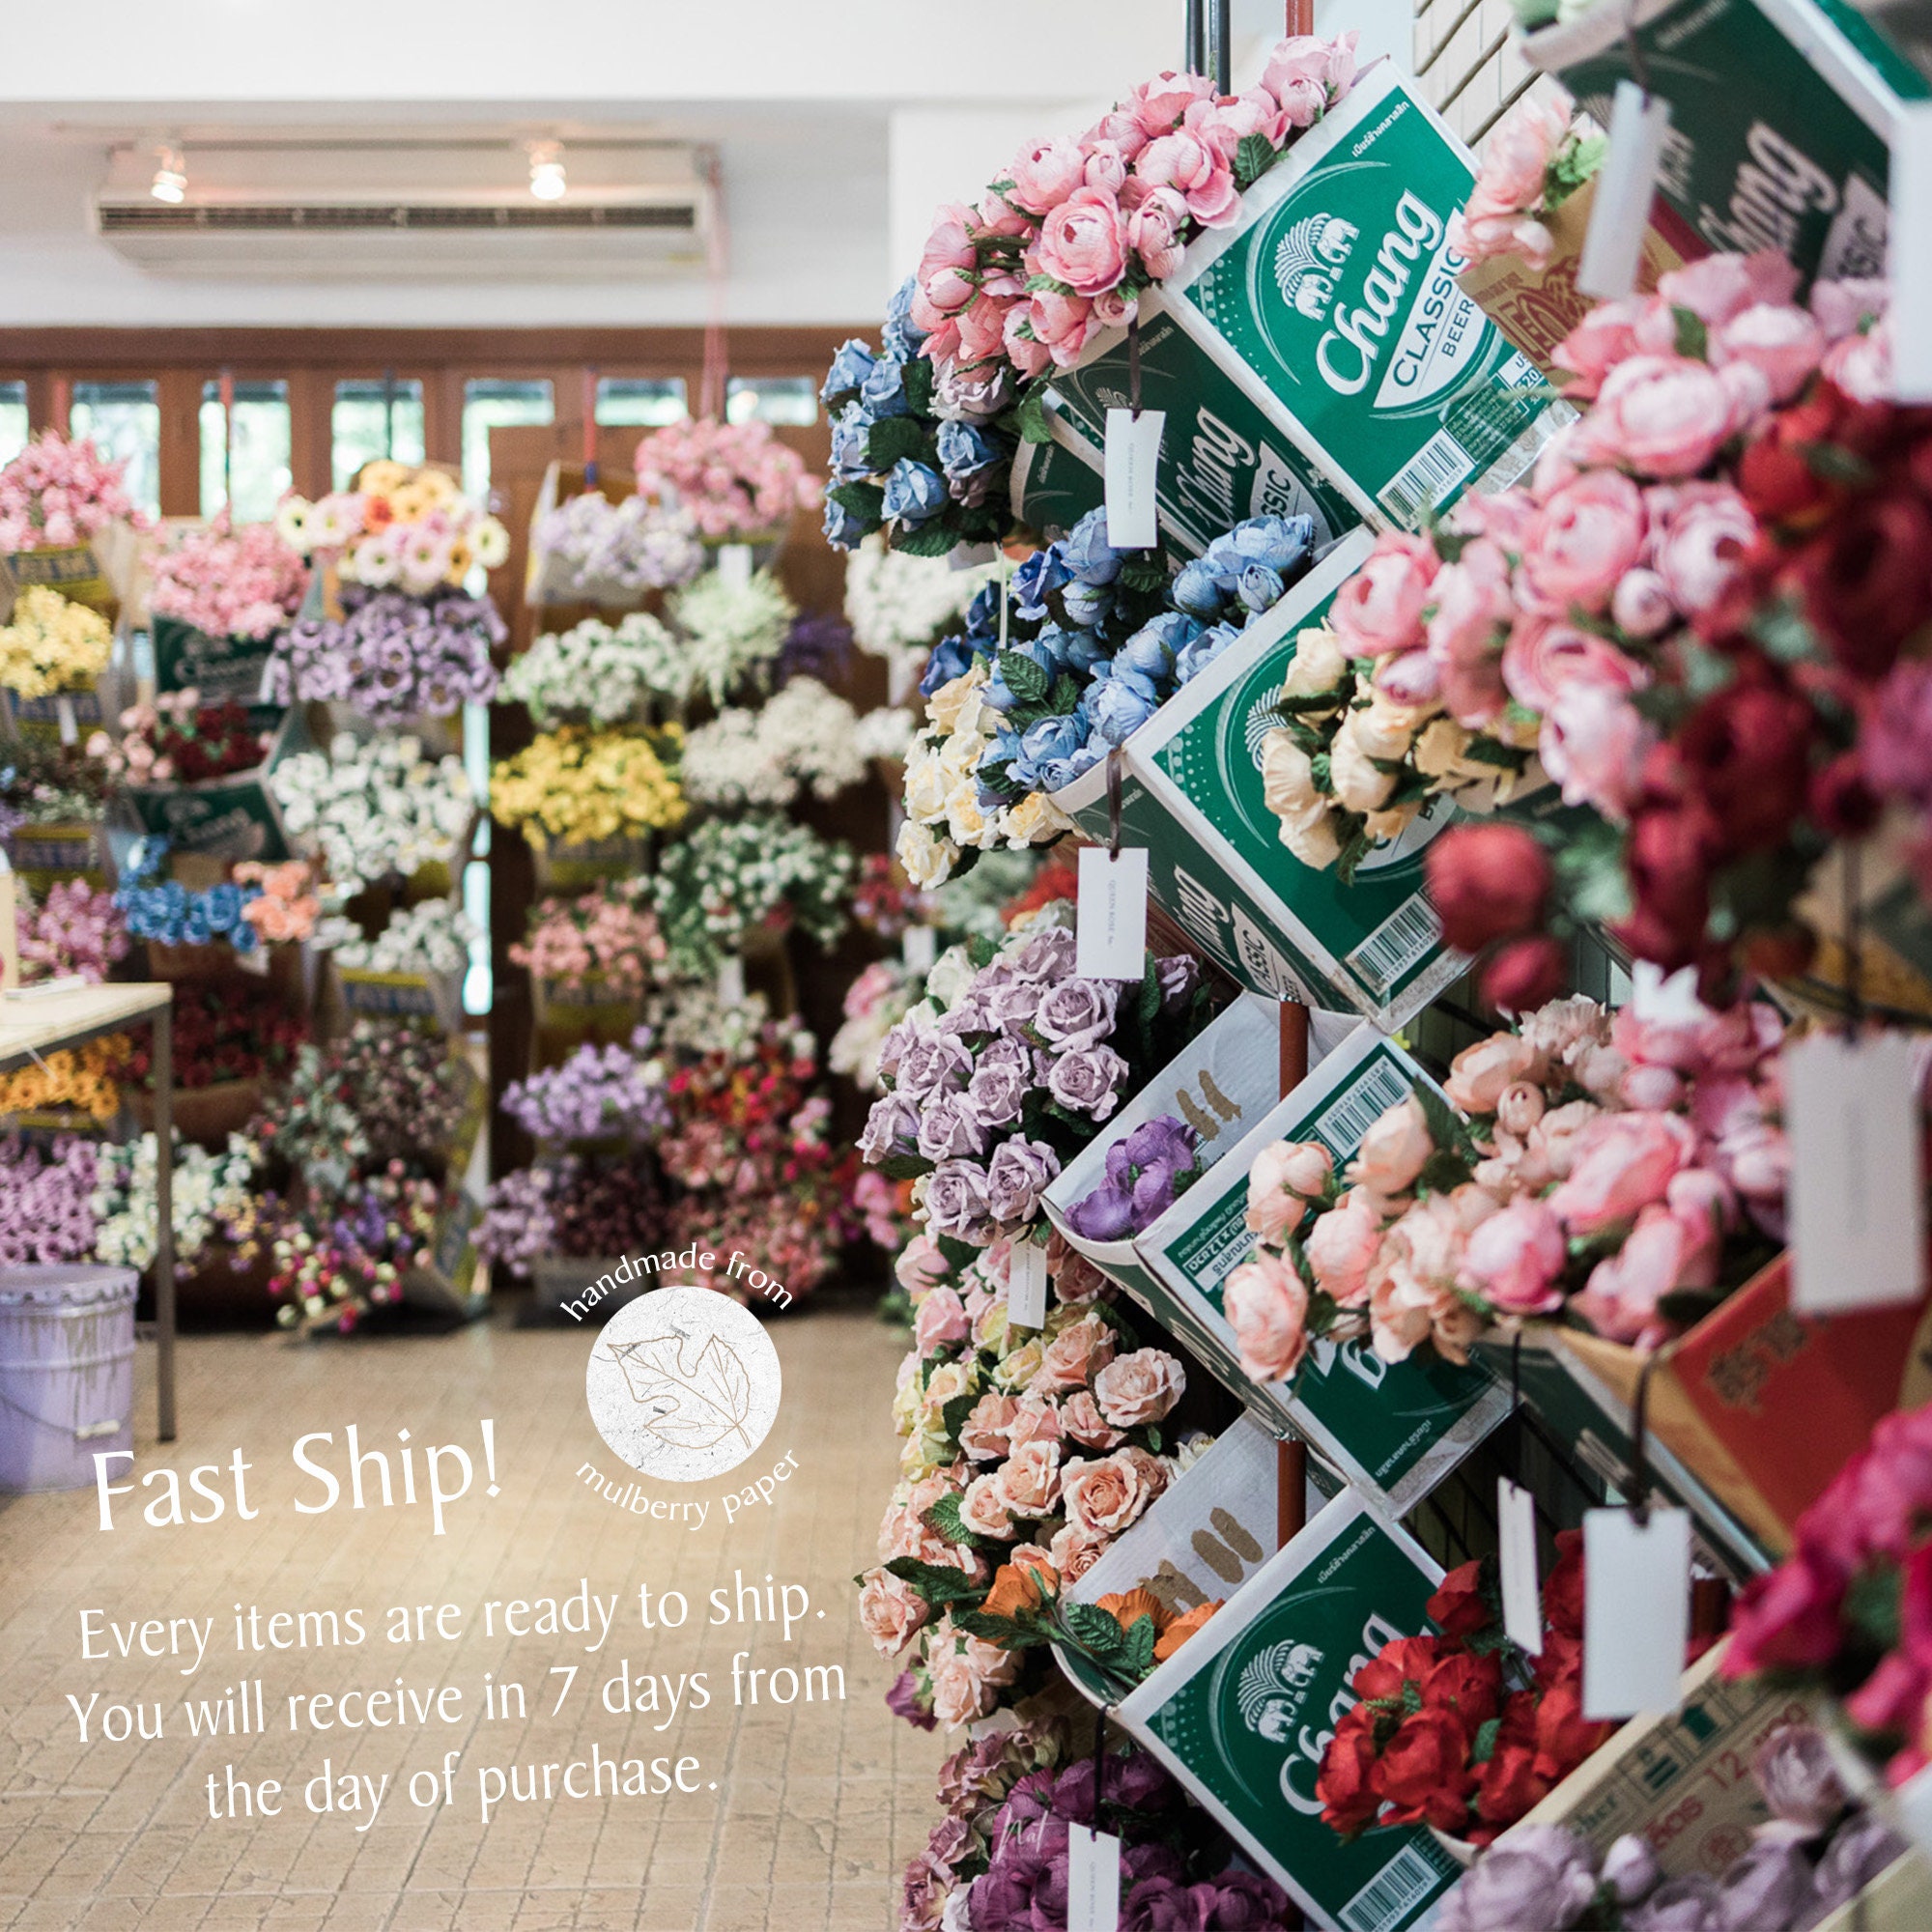 Cherry Blossom Paper Flower Bouquet – Hillwood Museum Shop